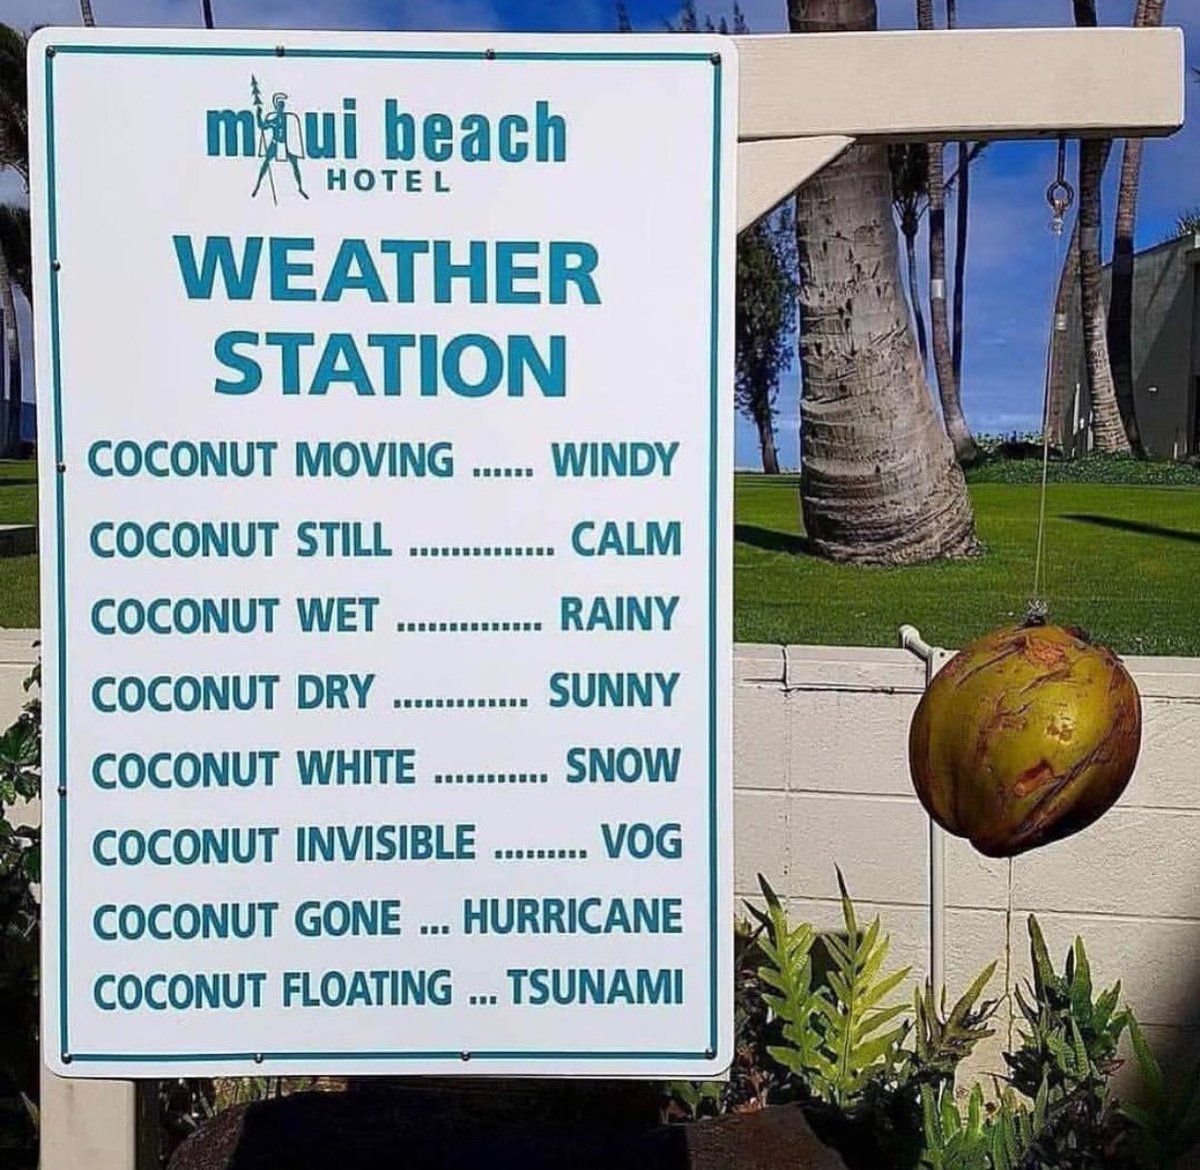 Maui Beach Hotel - Weather Station #HurricaneLane. 